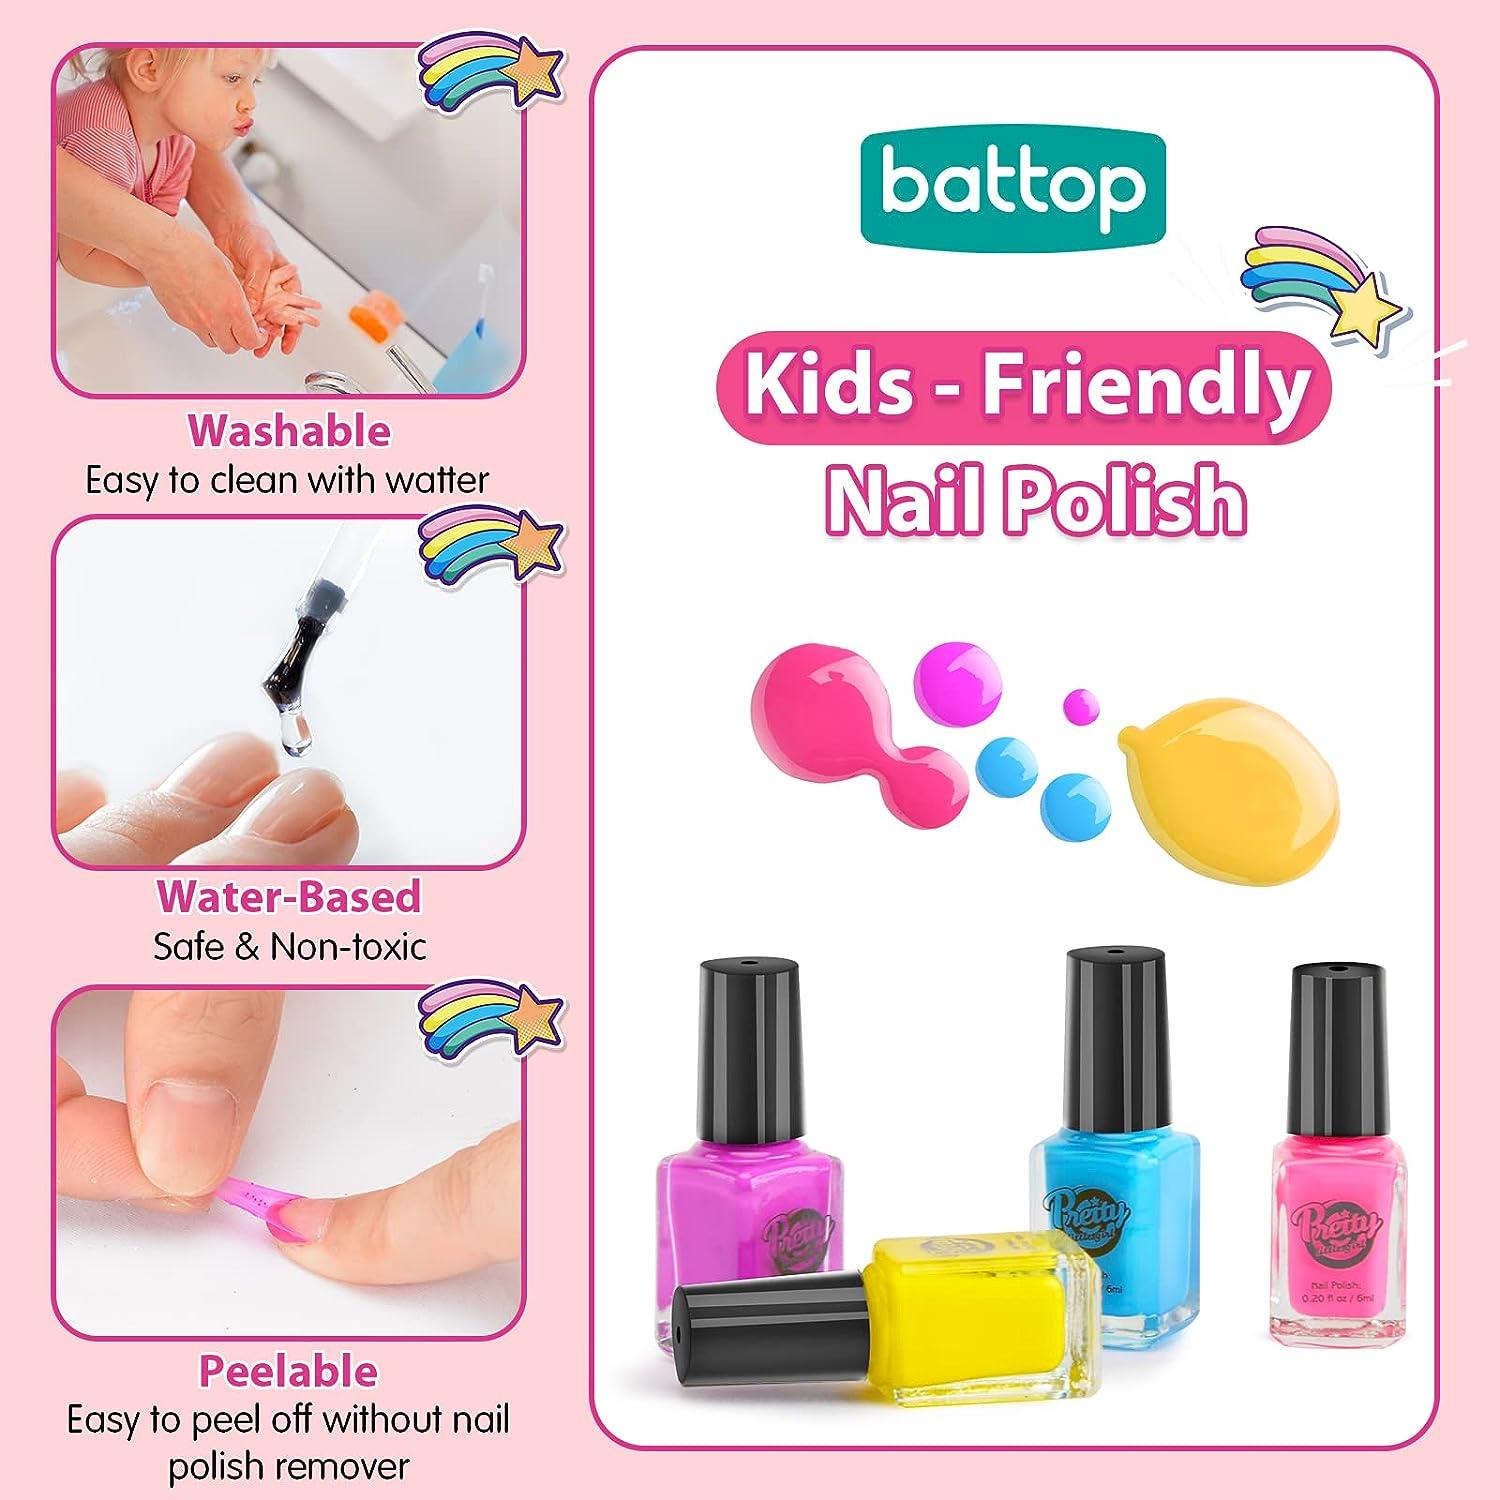 BATTOP Kids Nail Polish Kit for Girls Ages 7-12 Years Old - Nail